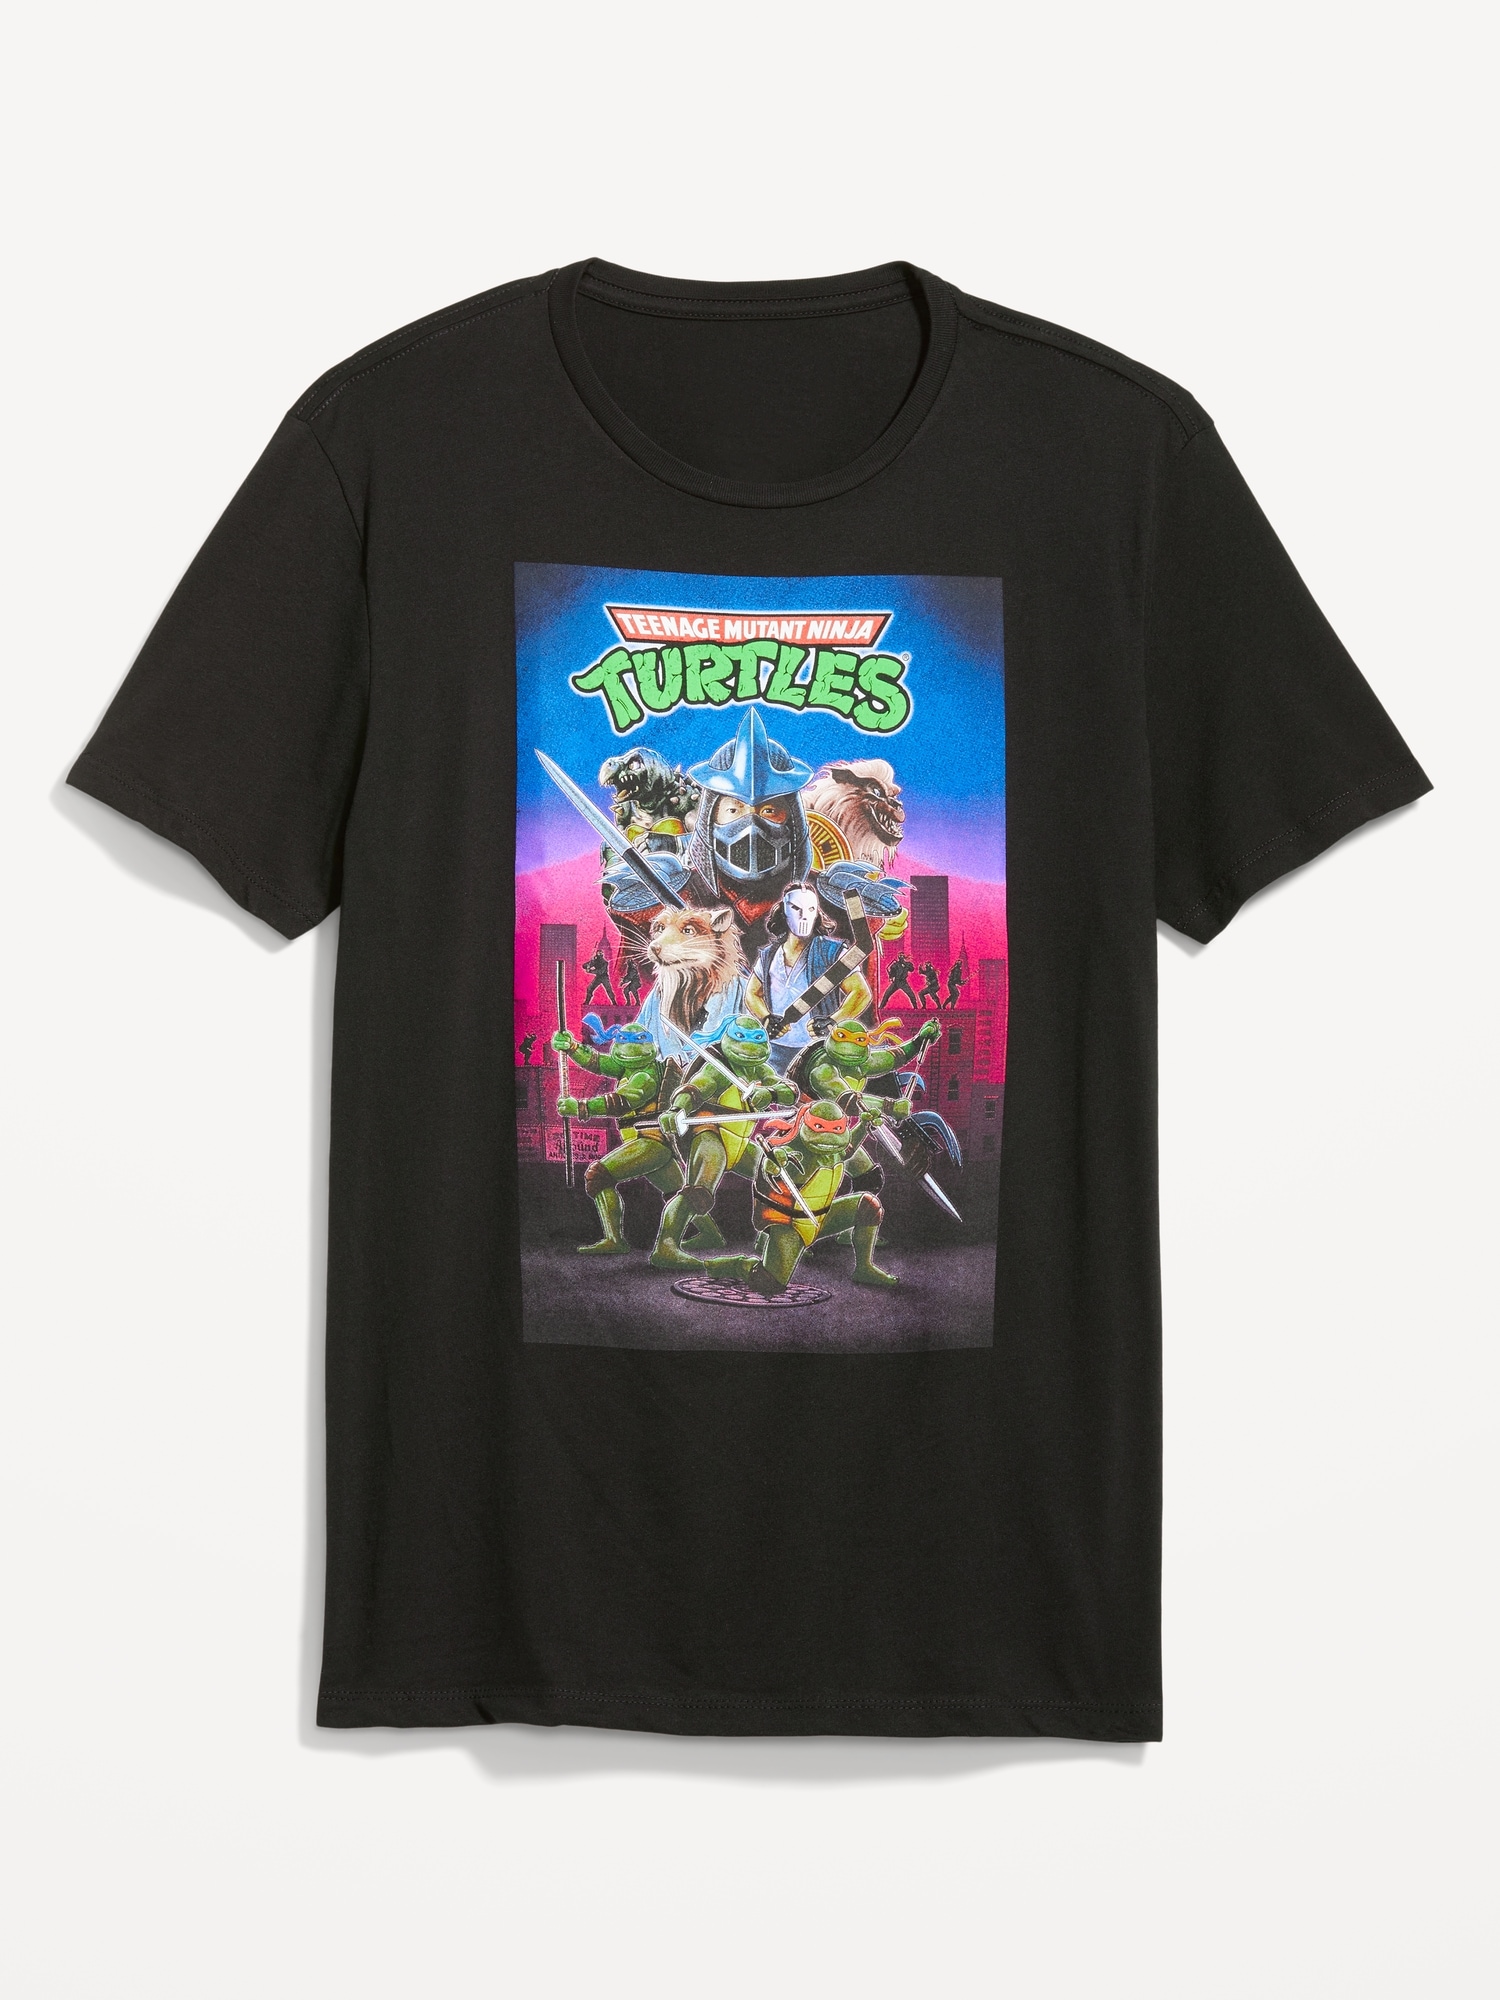 Old Navy - Teenage Mutant Ninja Turtles Top! Boys Green Shirt Size S(6-7)